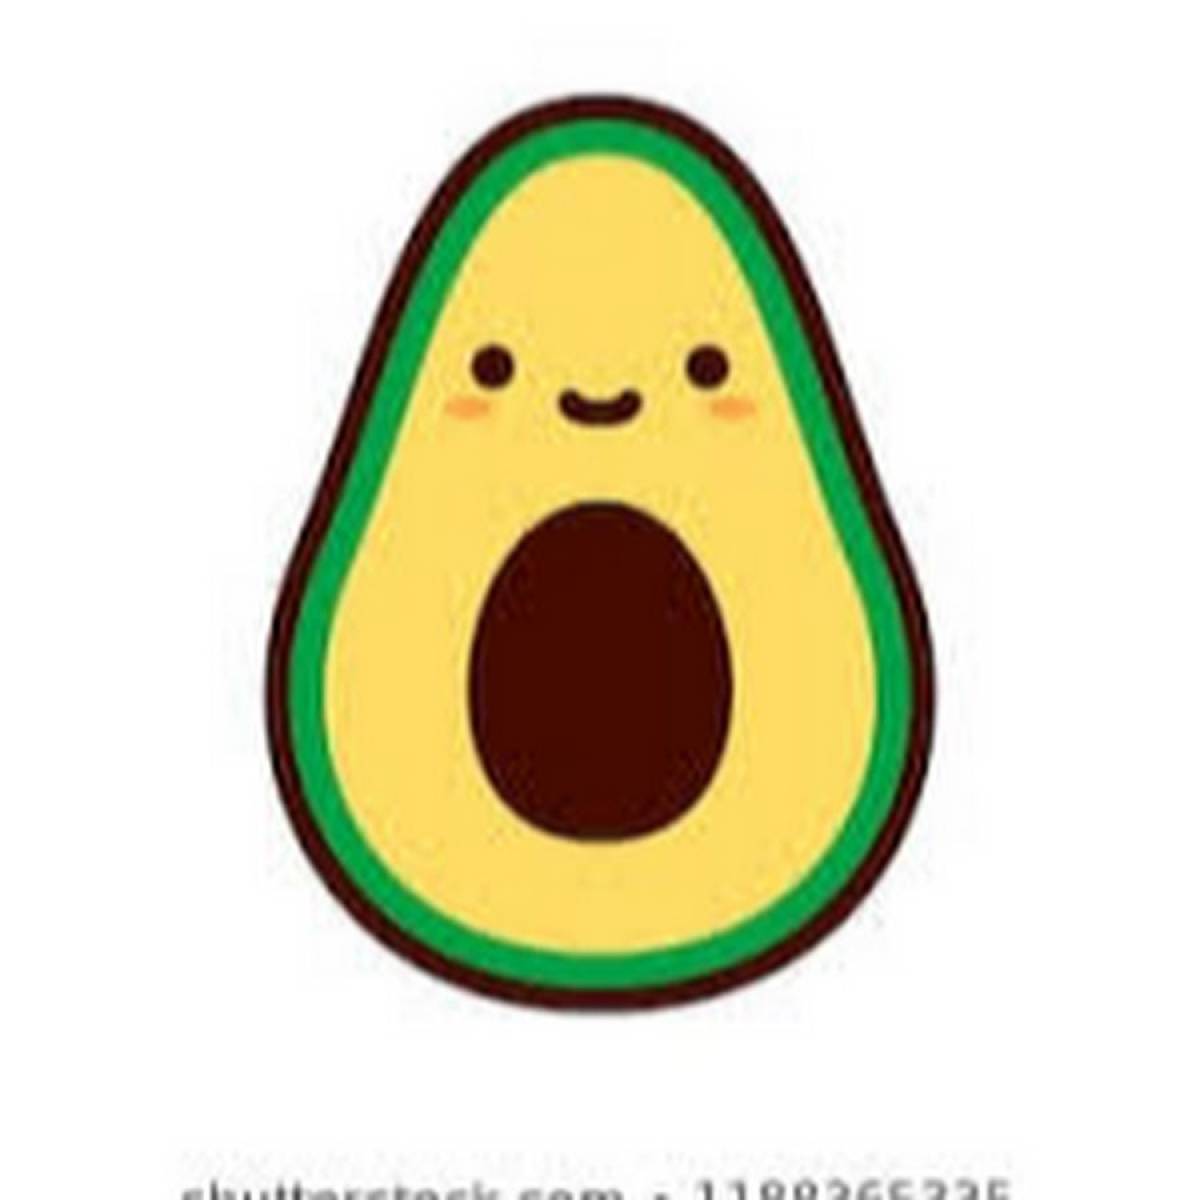 Eyed avocado #2